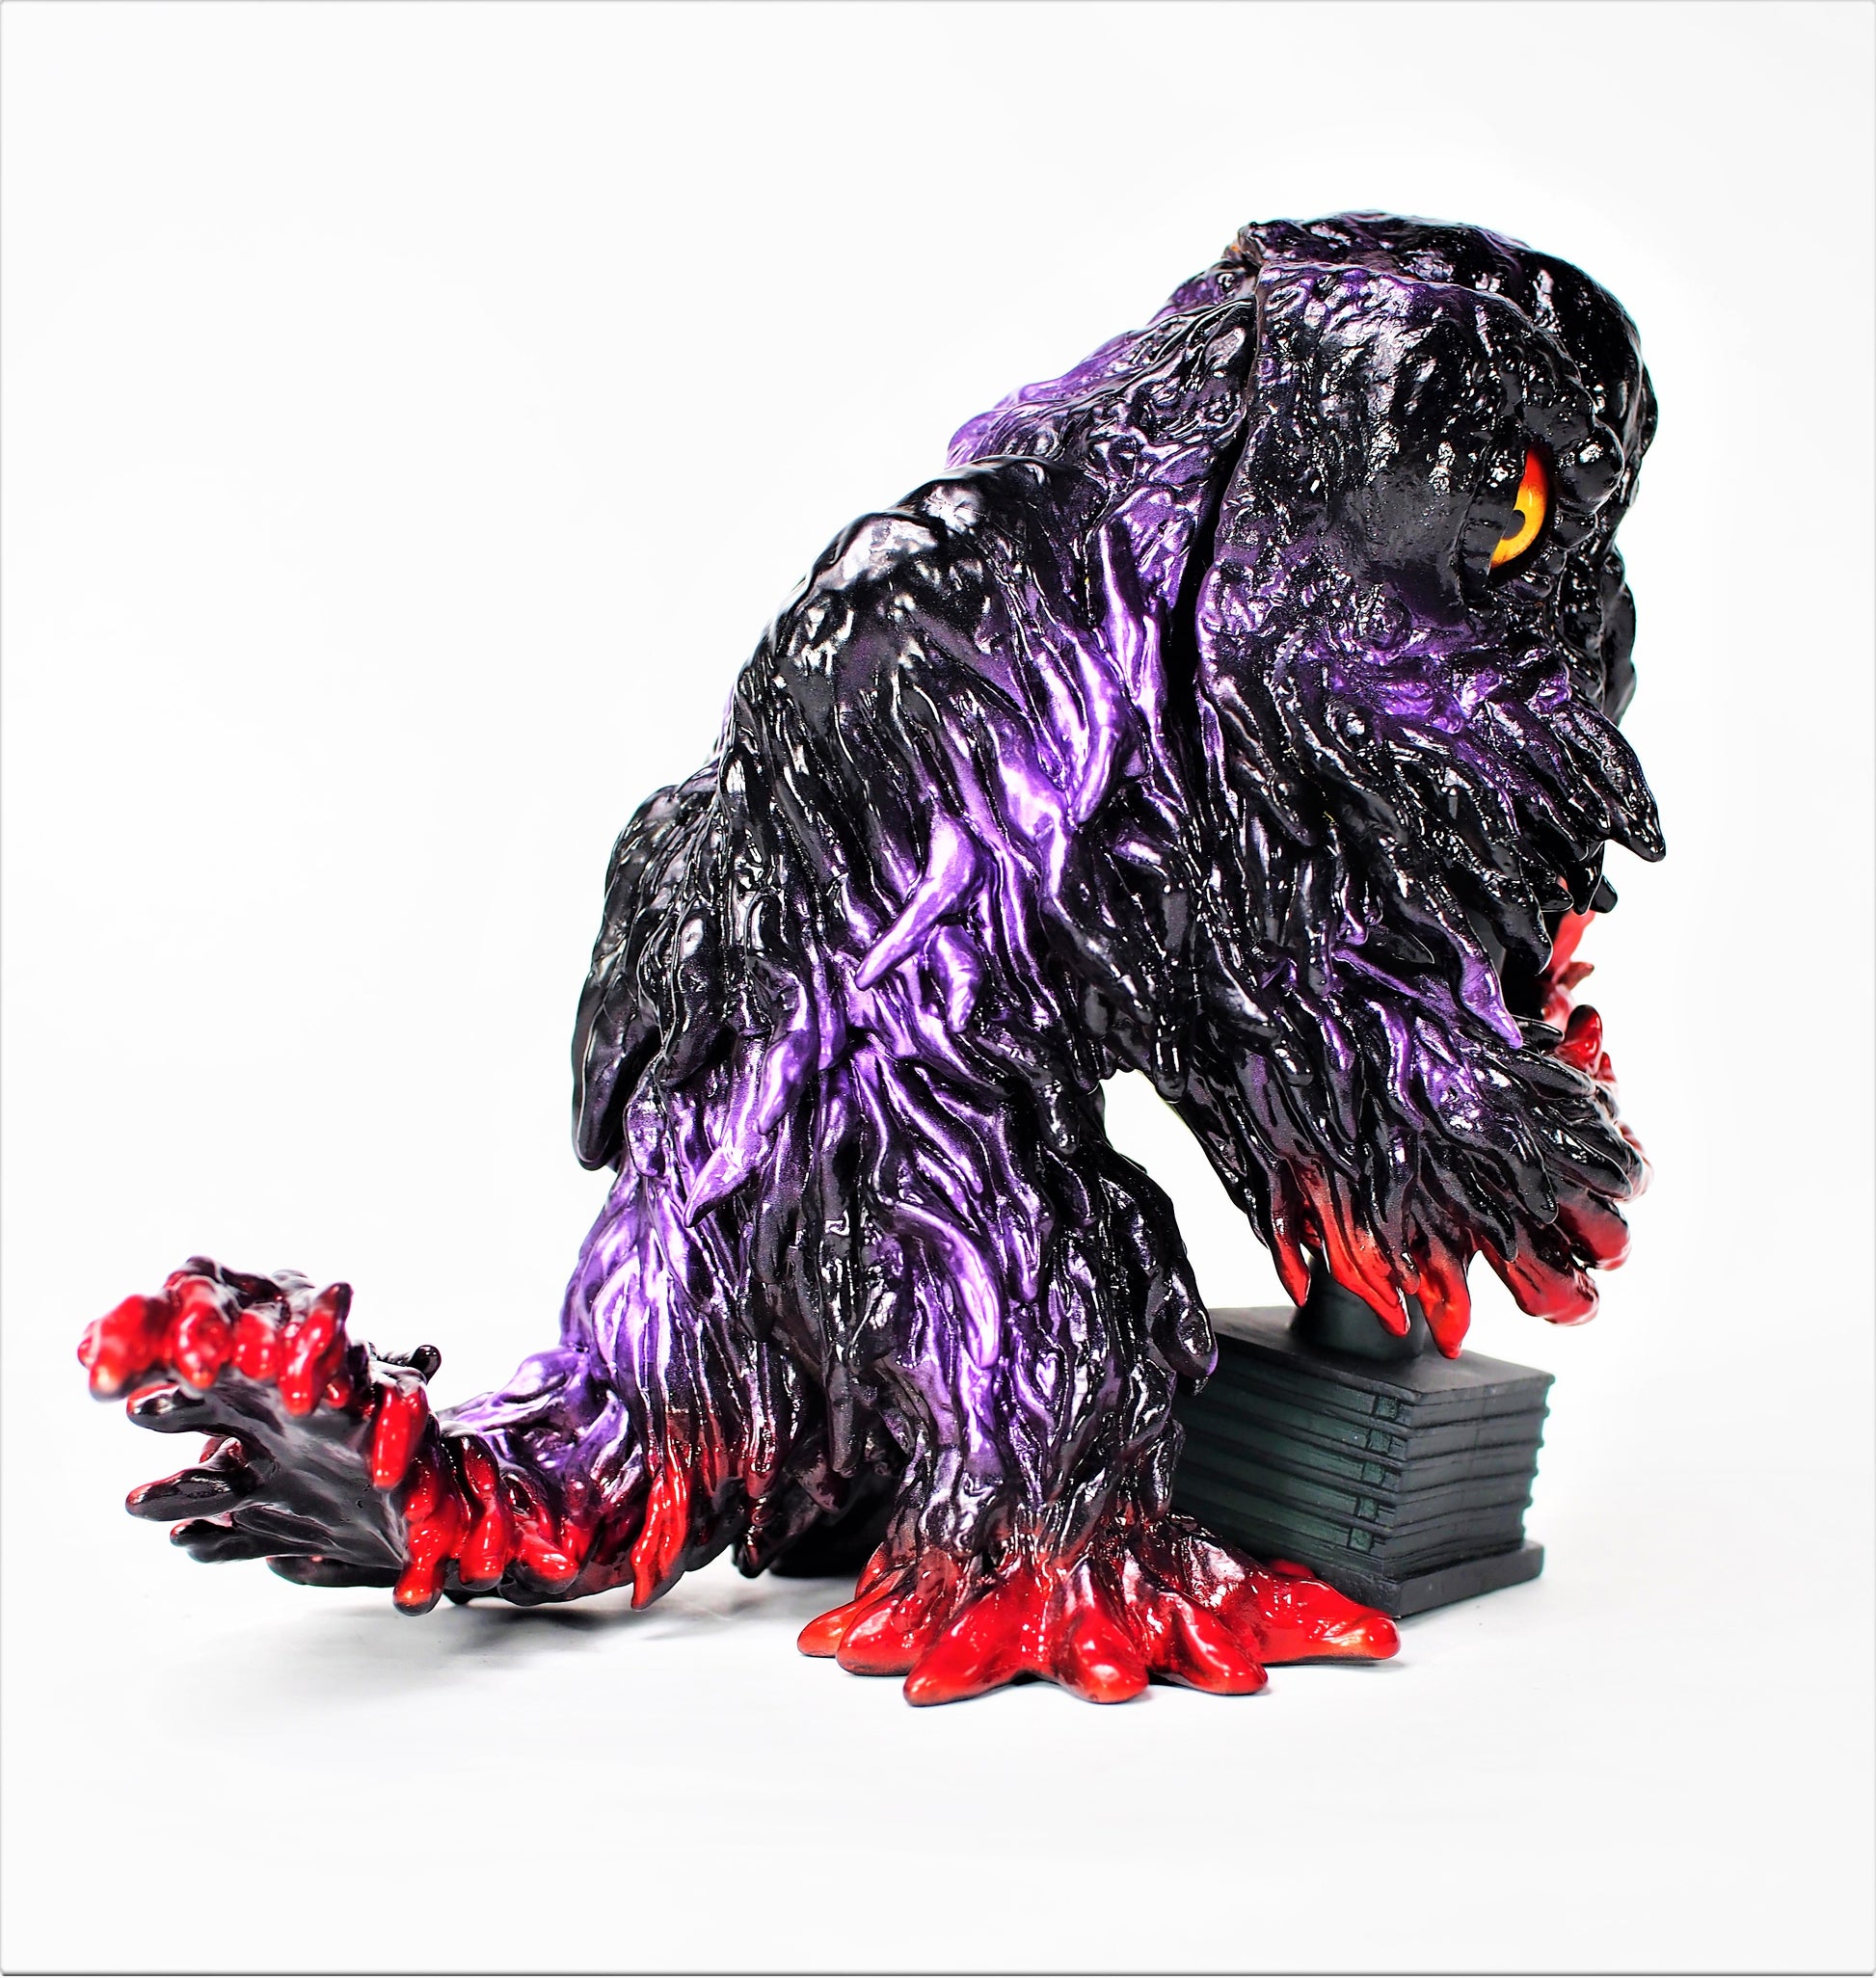 CCP Artistic Monsters Collection "Godzilla" Chimney Hedorah Landing Nightmare Ver. | animota